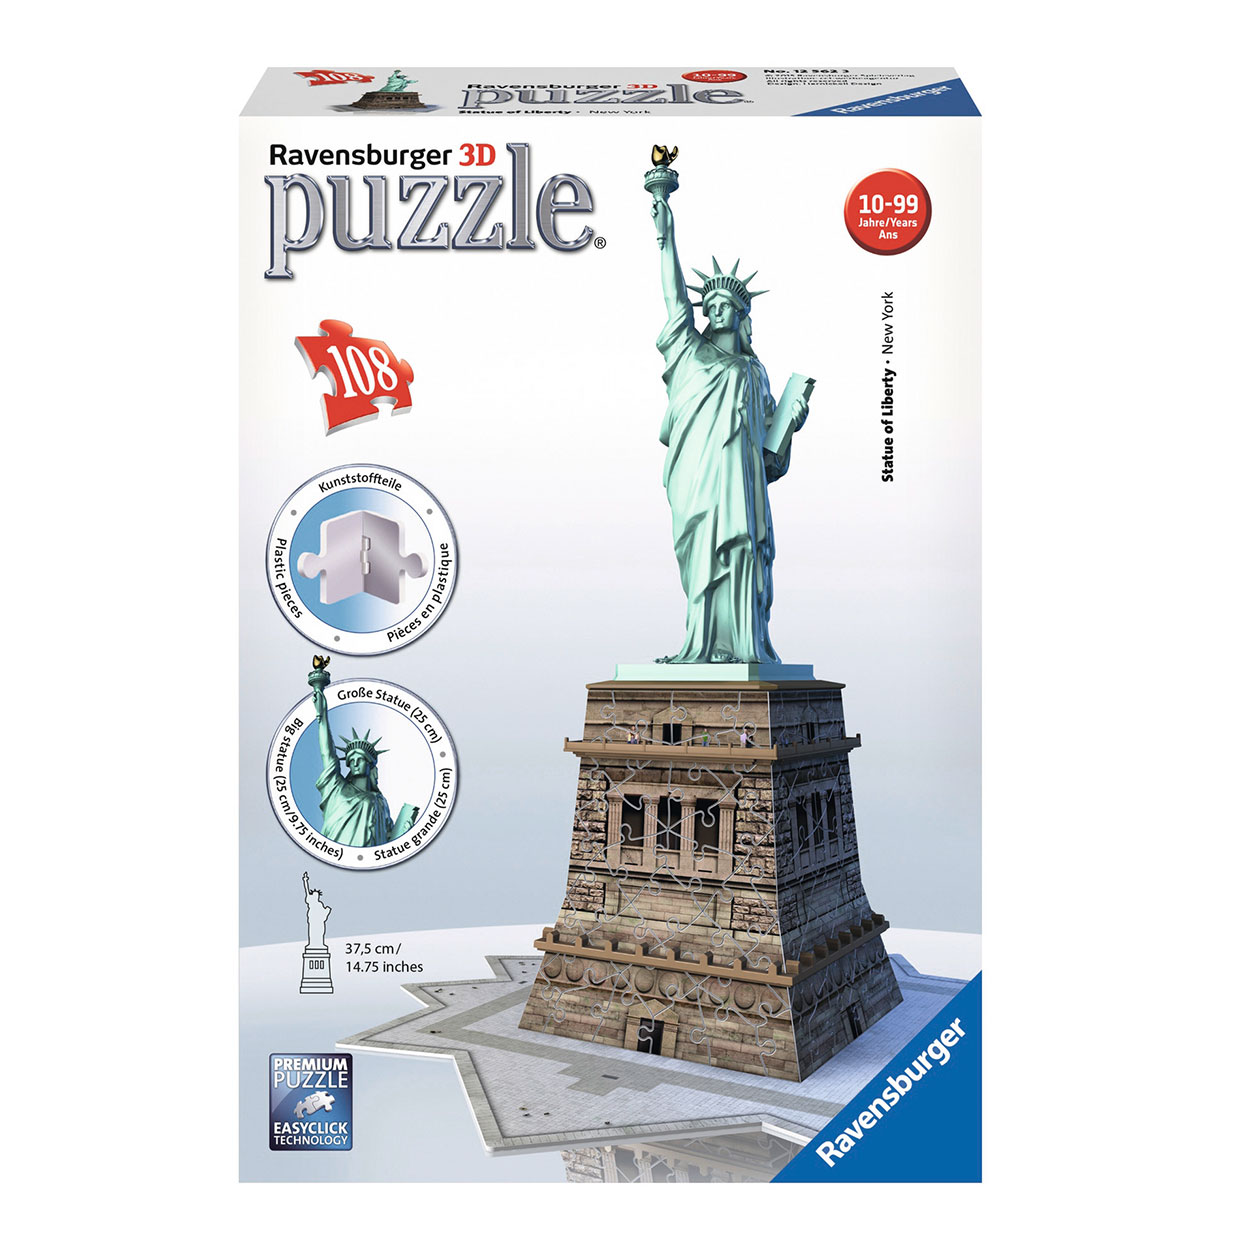 Ravensburger 3D Puzzel - Vrijheidsbeeld